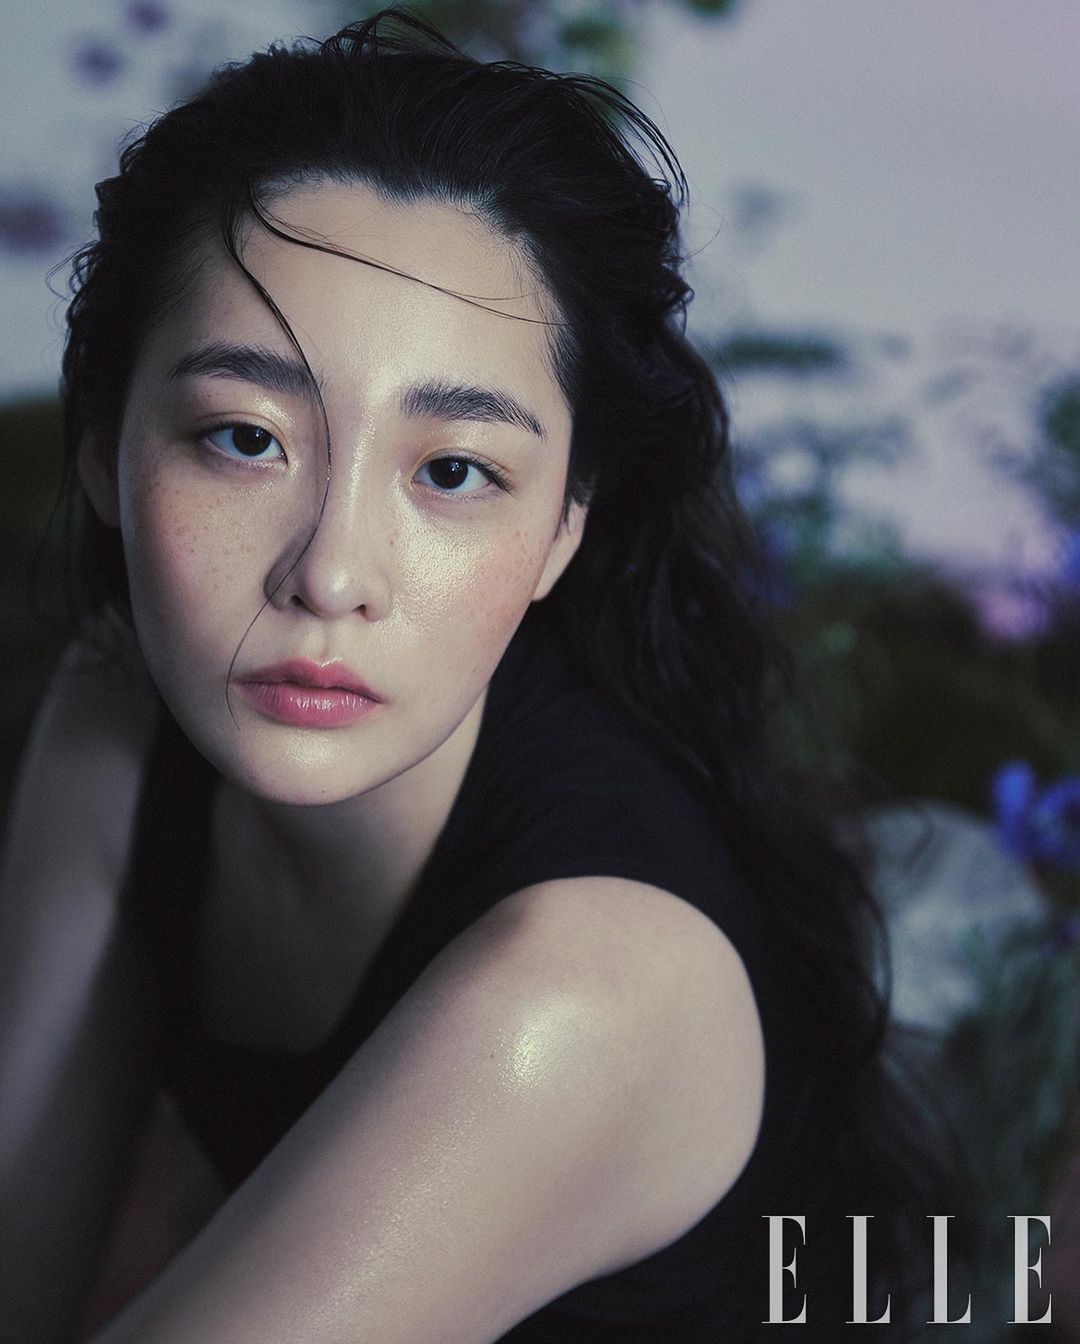 Pemeran Drama Pachinko, Ini Profil dan Fakta Kim Min Ha